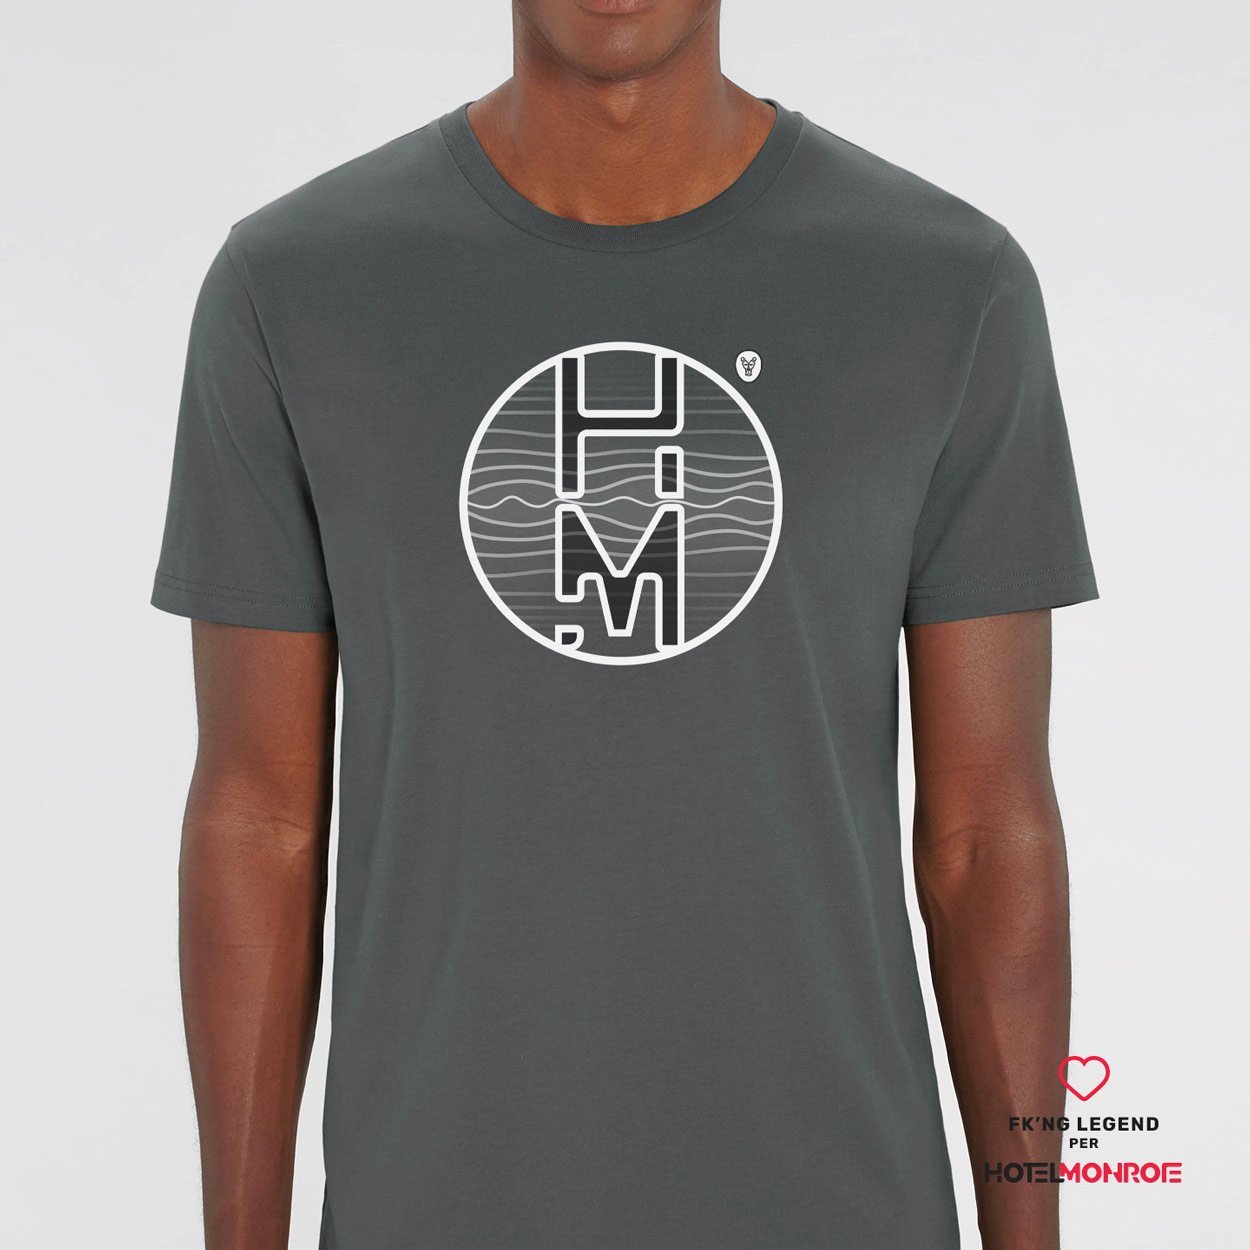 
                  
                    T-Shirt UNISEX - HOTEL MONROE - Grey - FK'NG LEGEND
                  
                